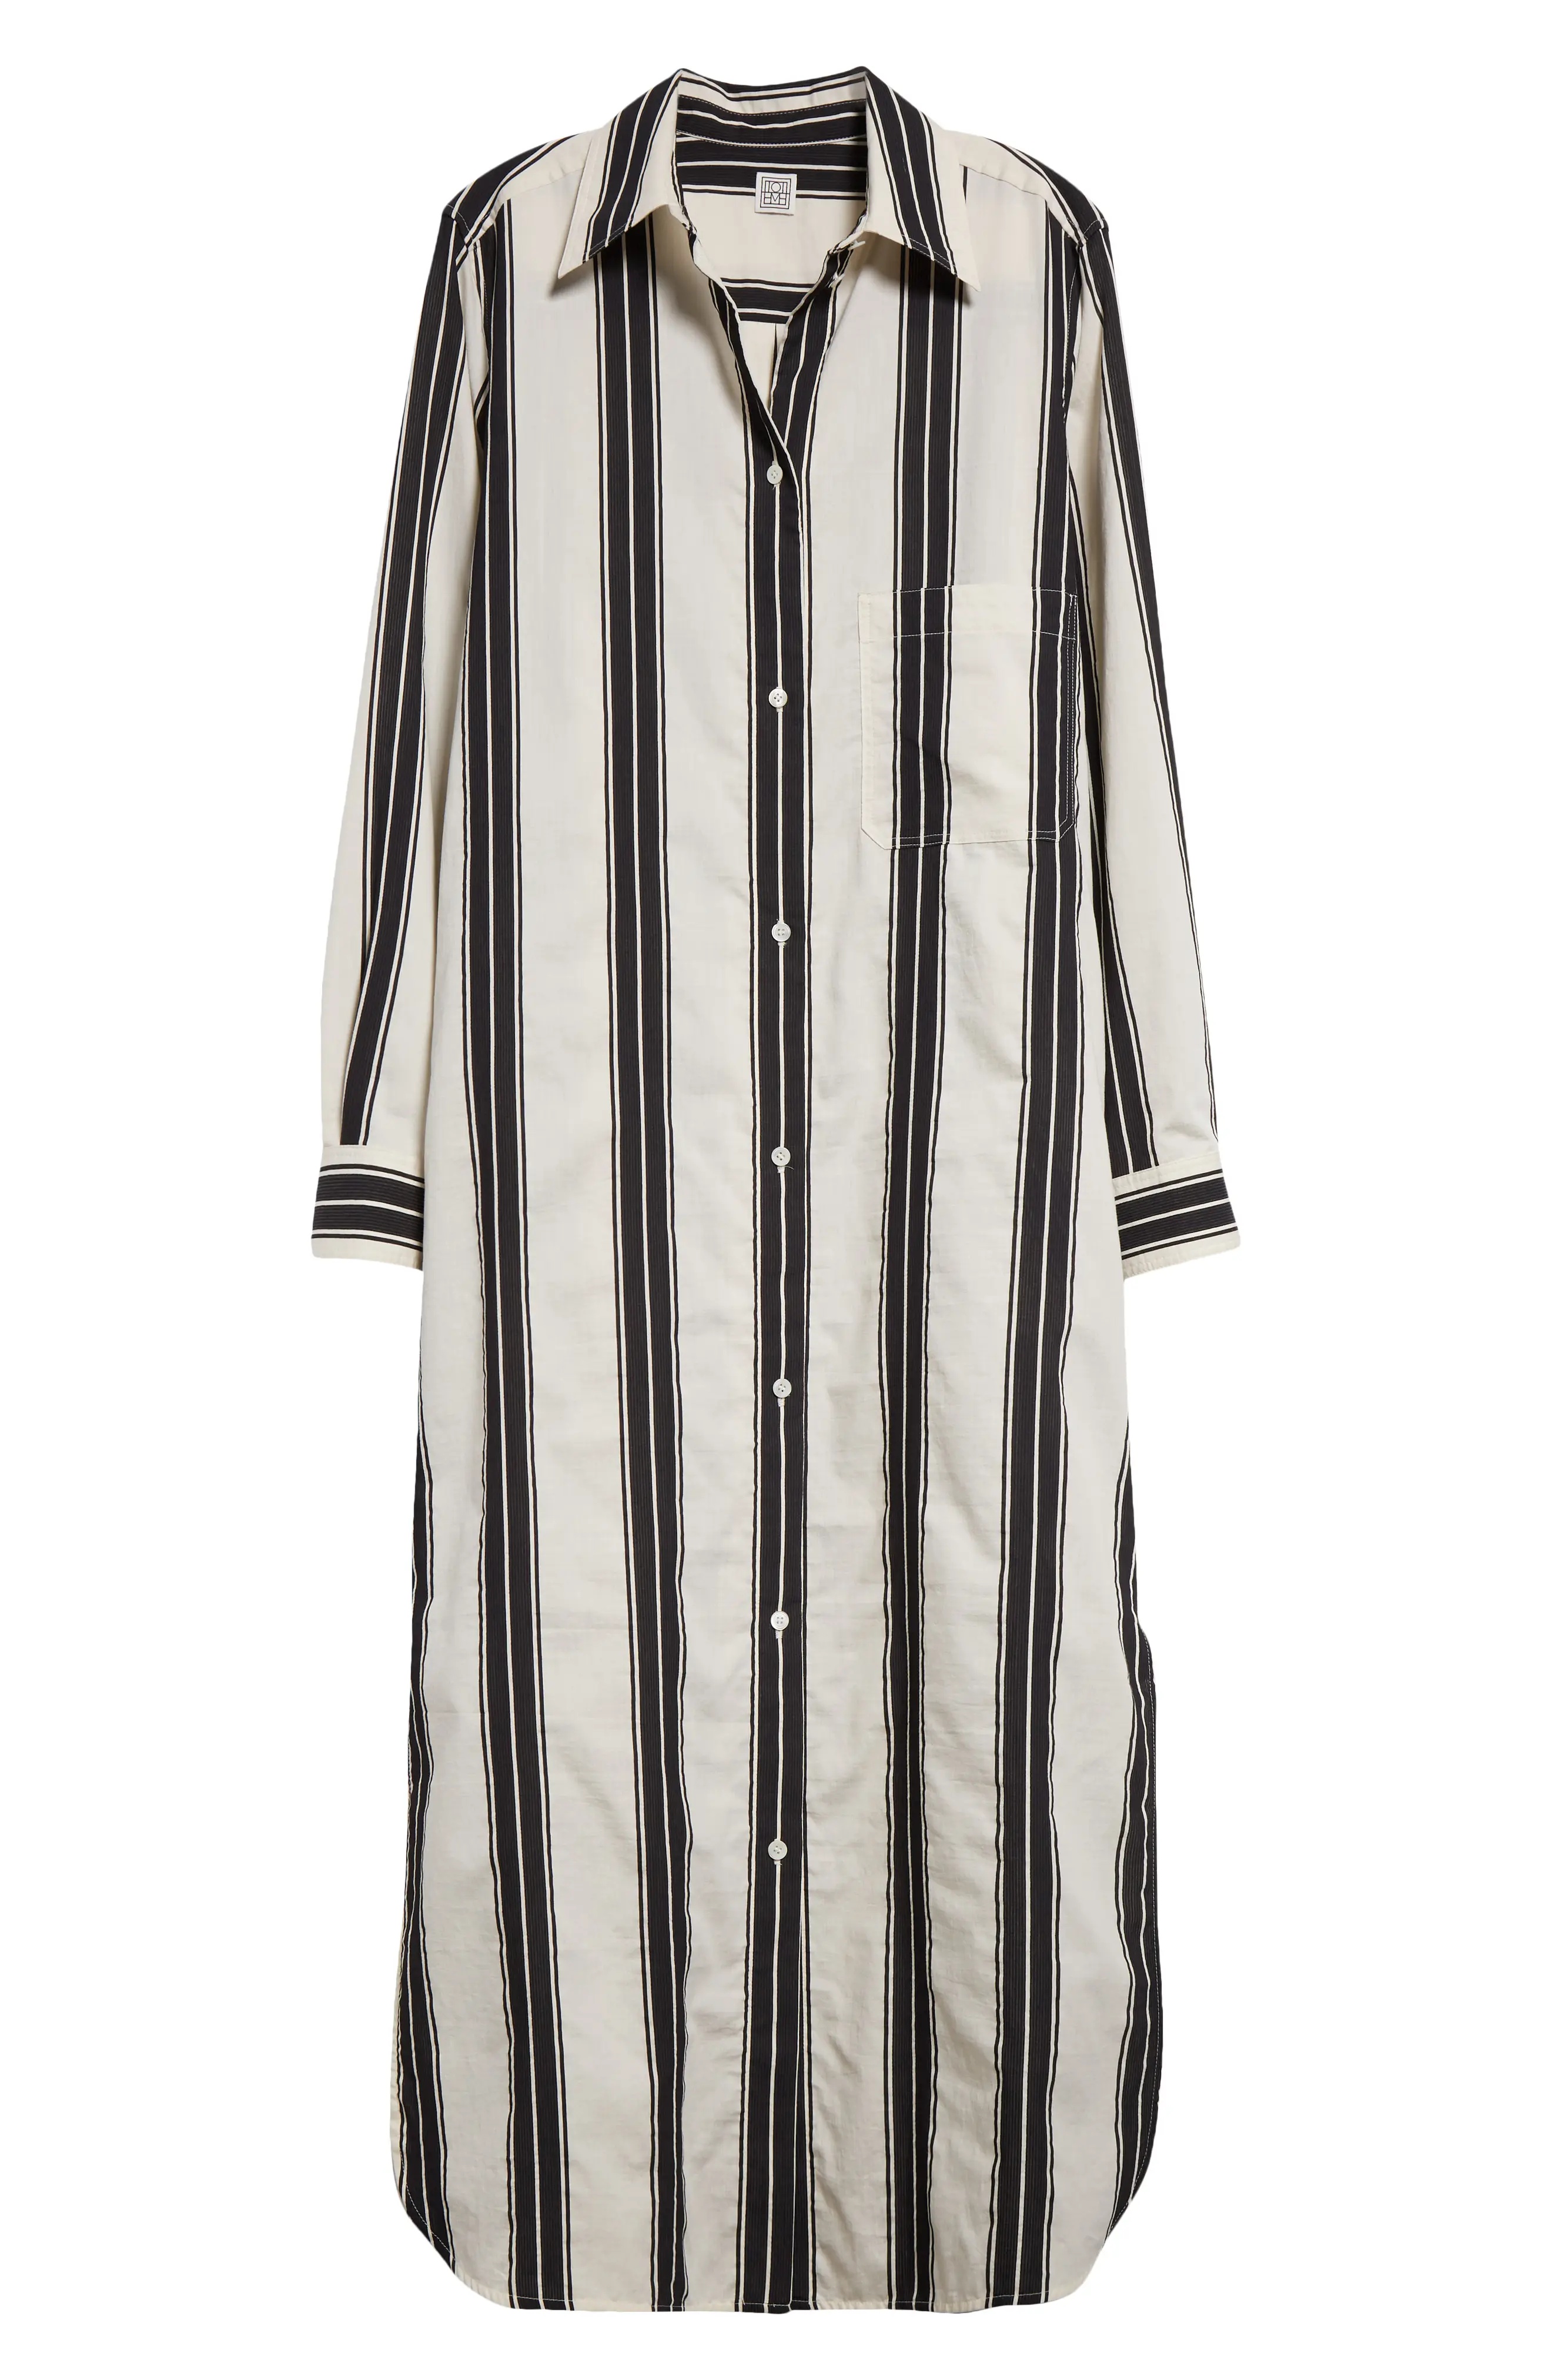 Jacquard Stripe Long Sleeve Midi Shirtdress in Black/White - 5